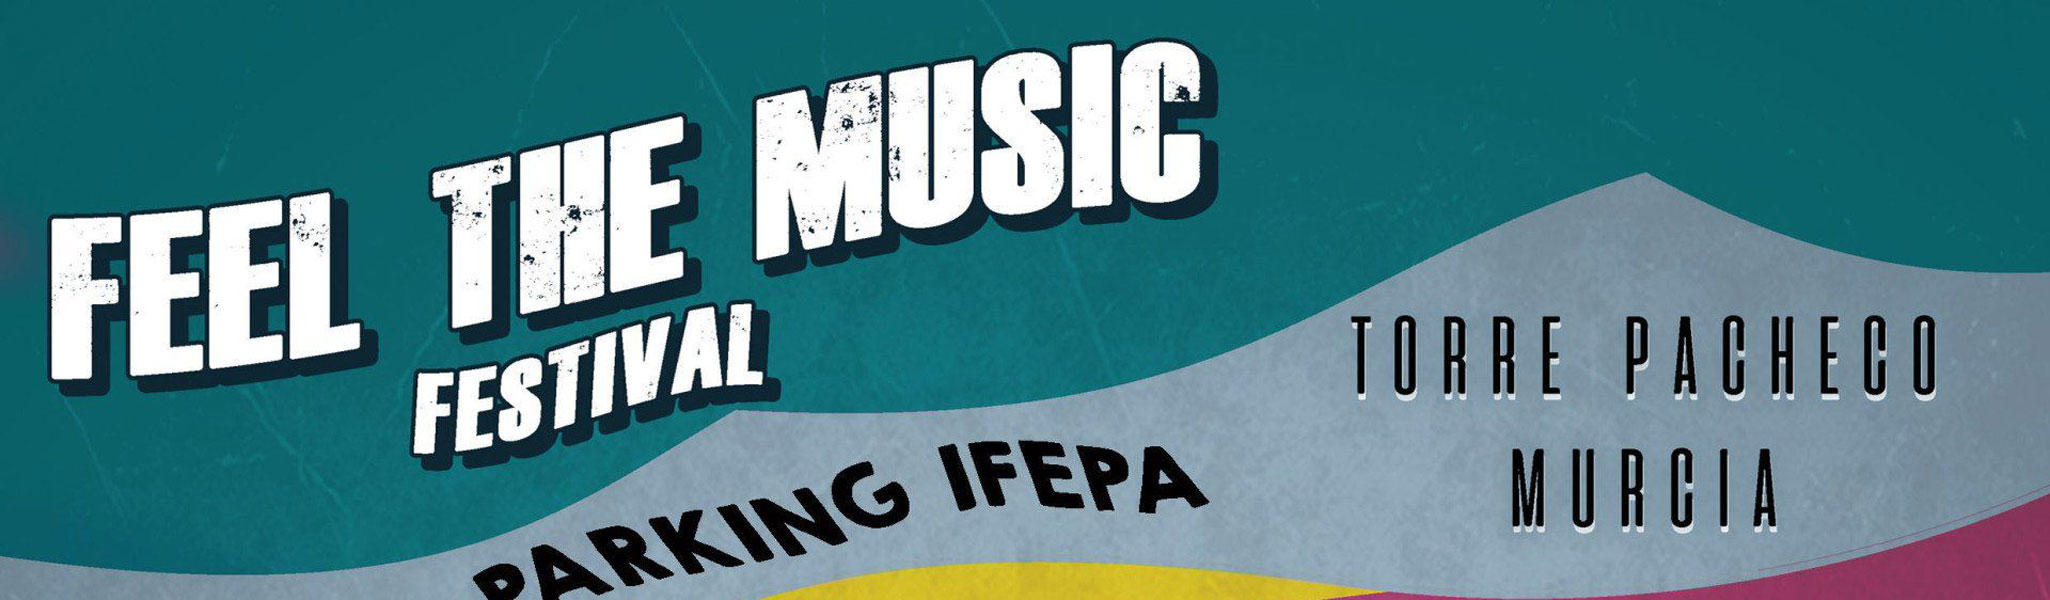 Feel the Music Festival: Torre Pacheco